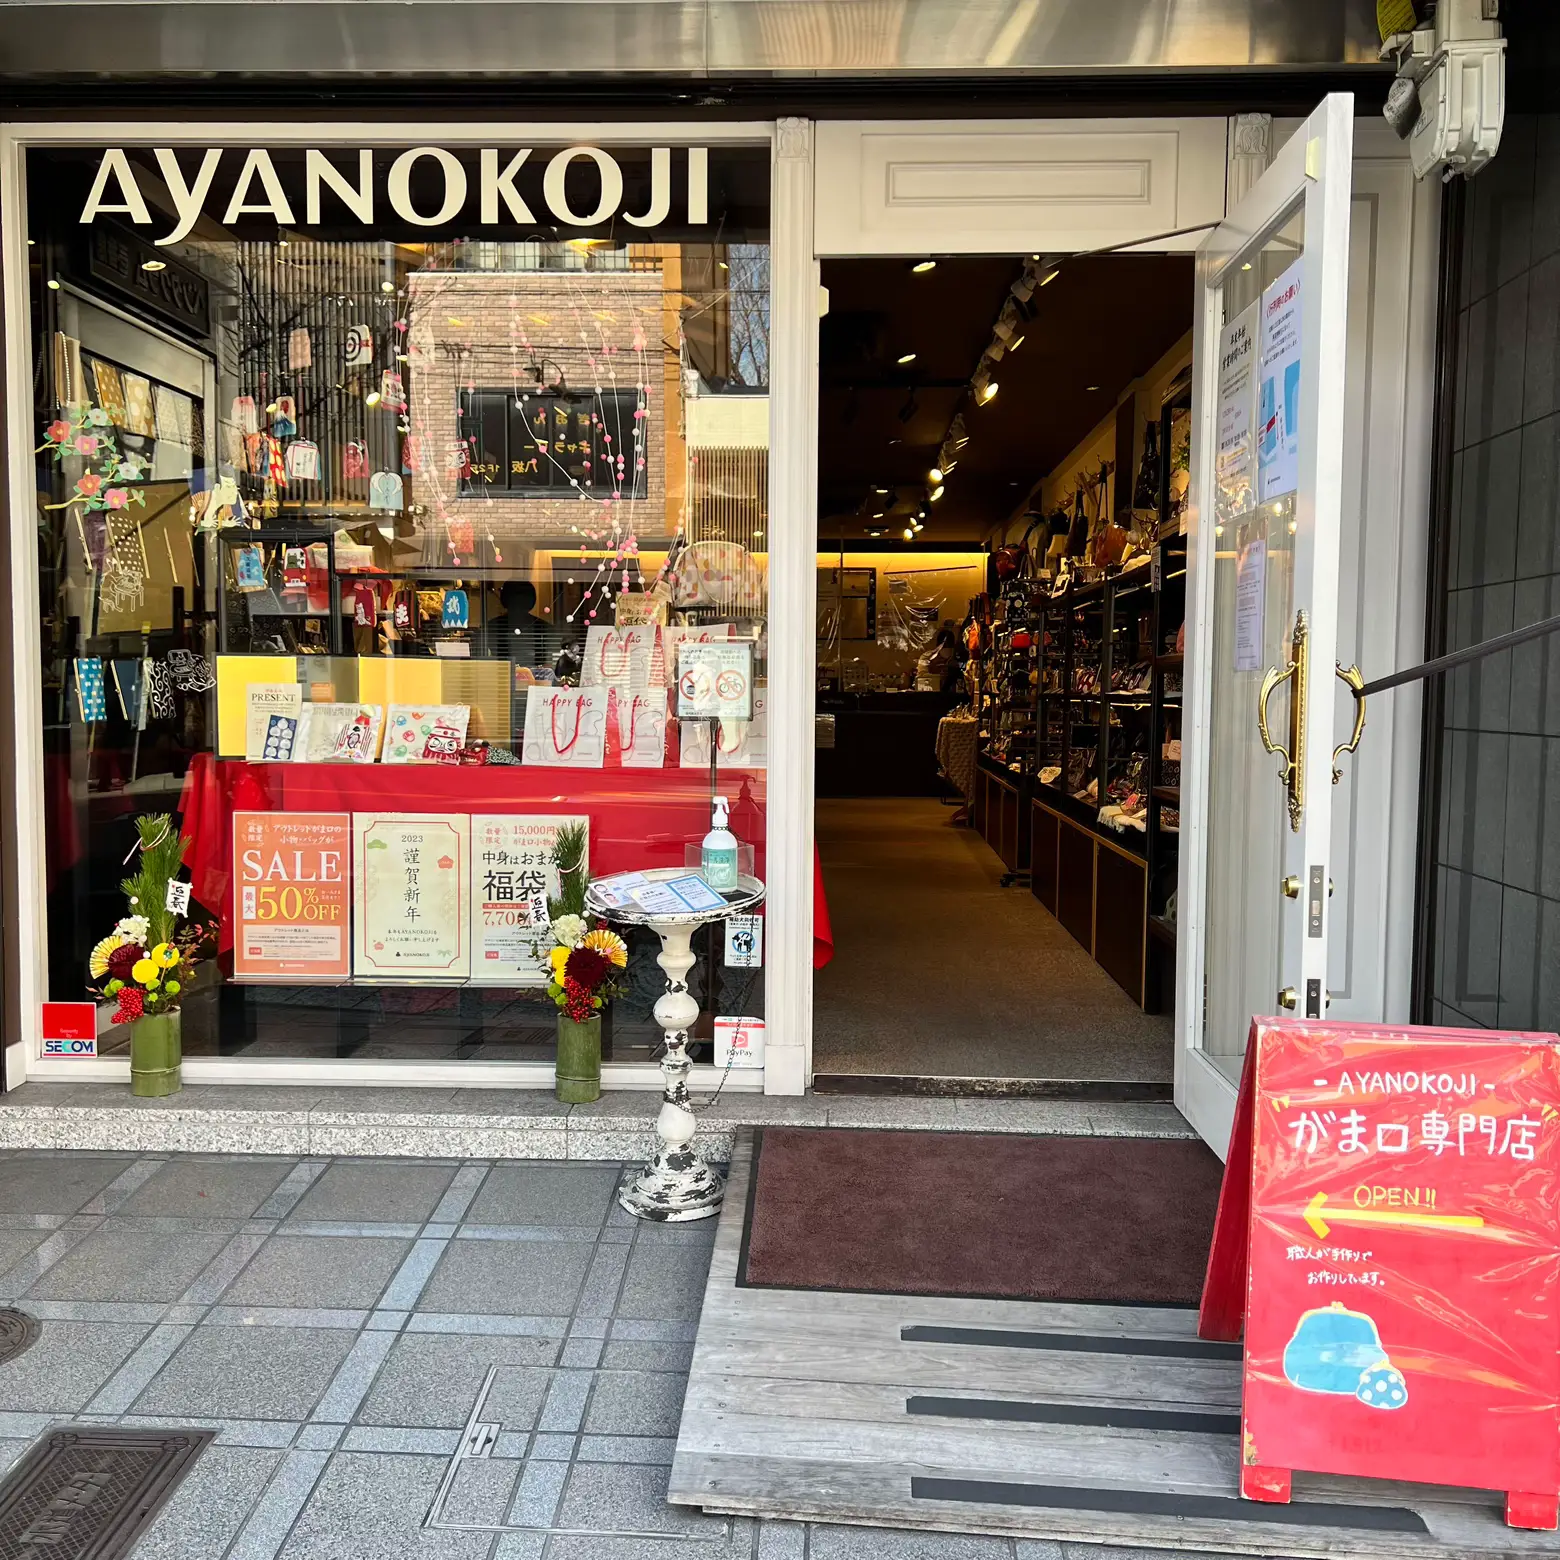 AYANOKOJIは、職人が手作りする京都のがま口専門店です。 決算特価商品 